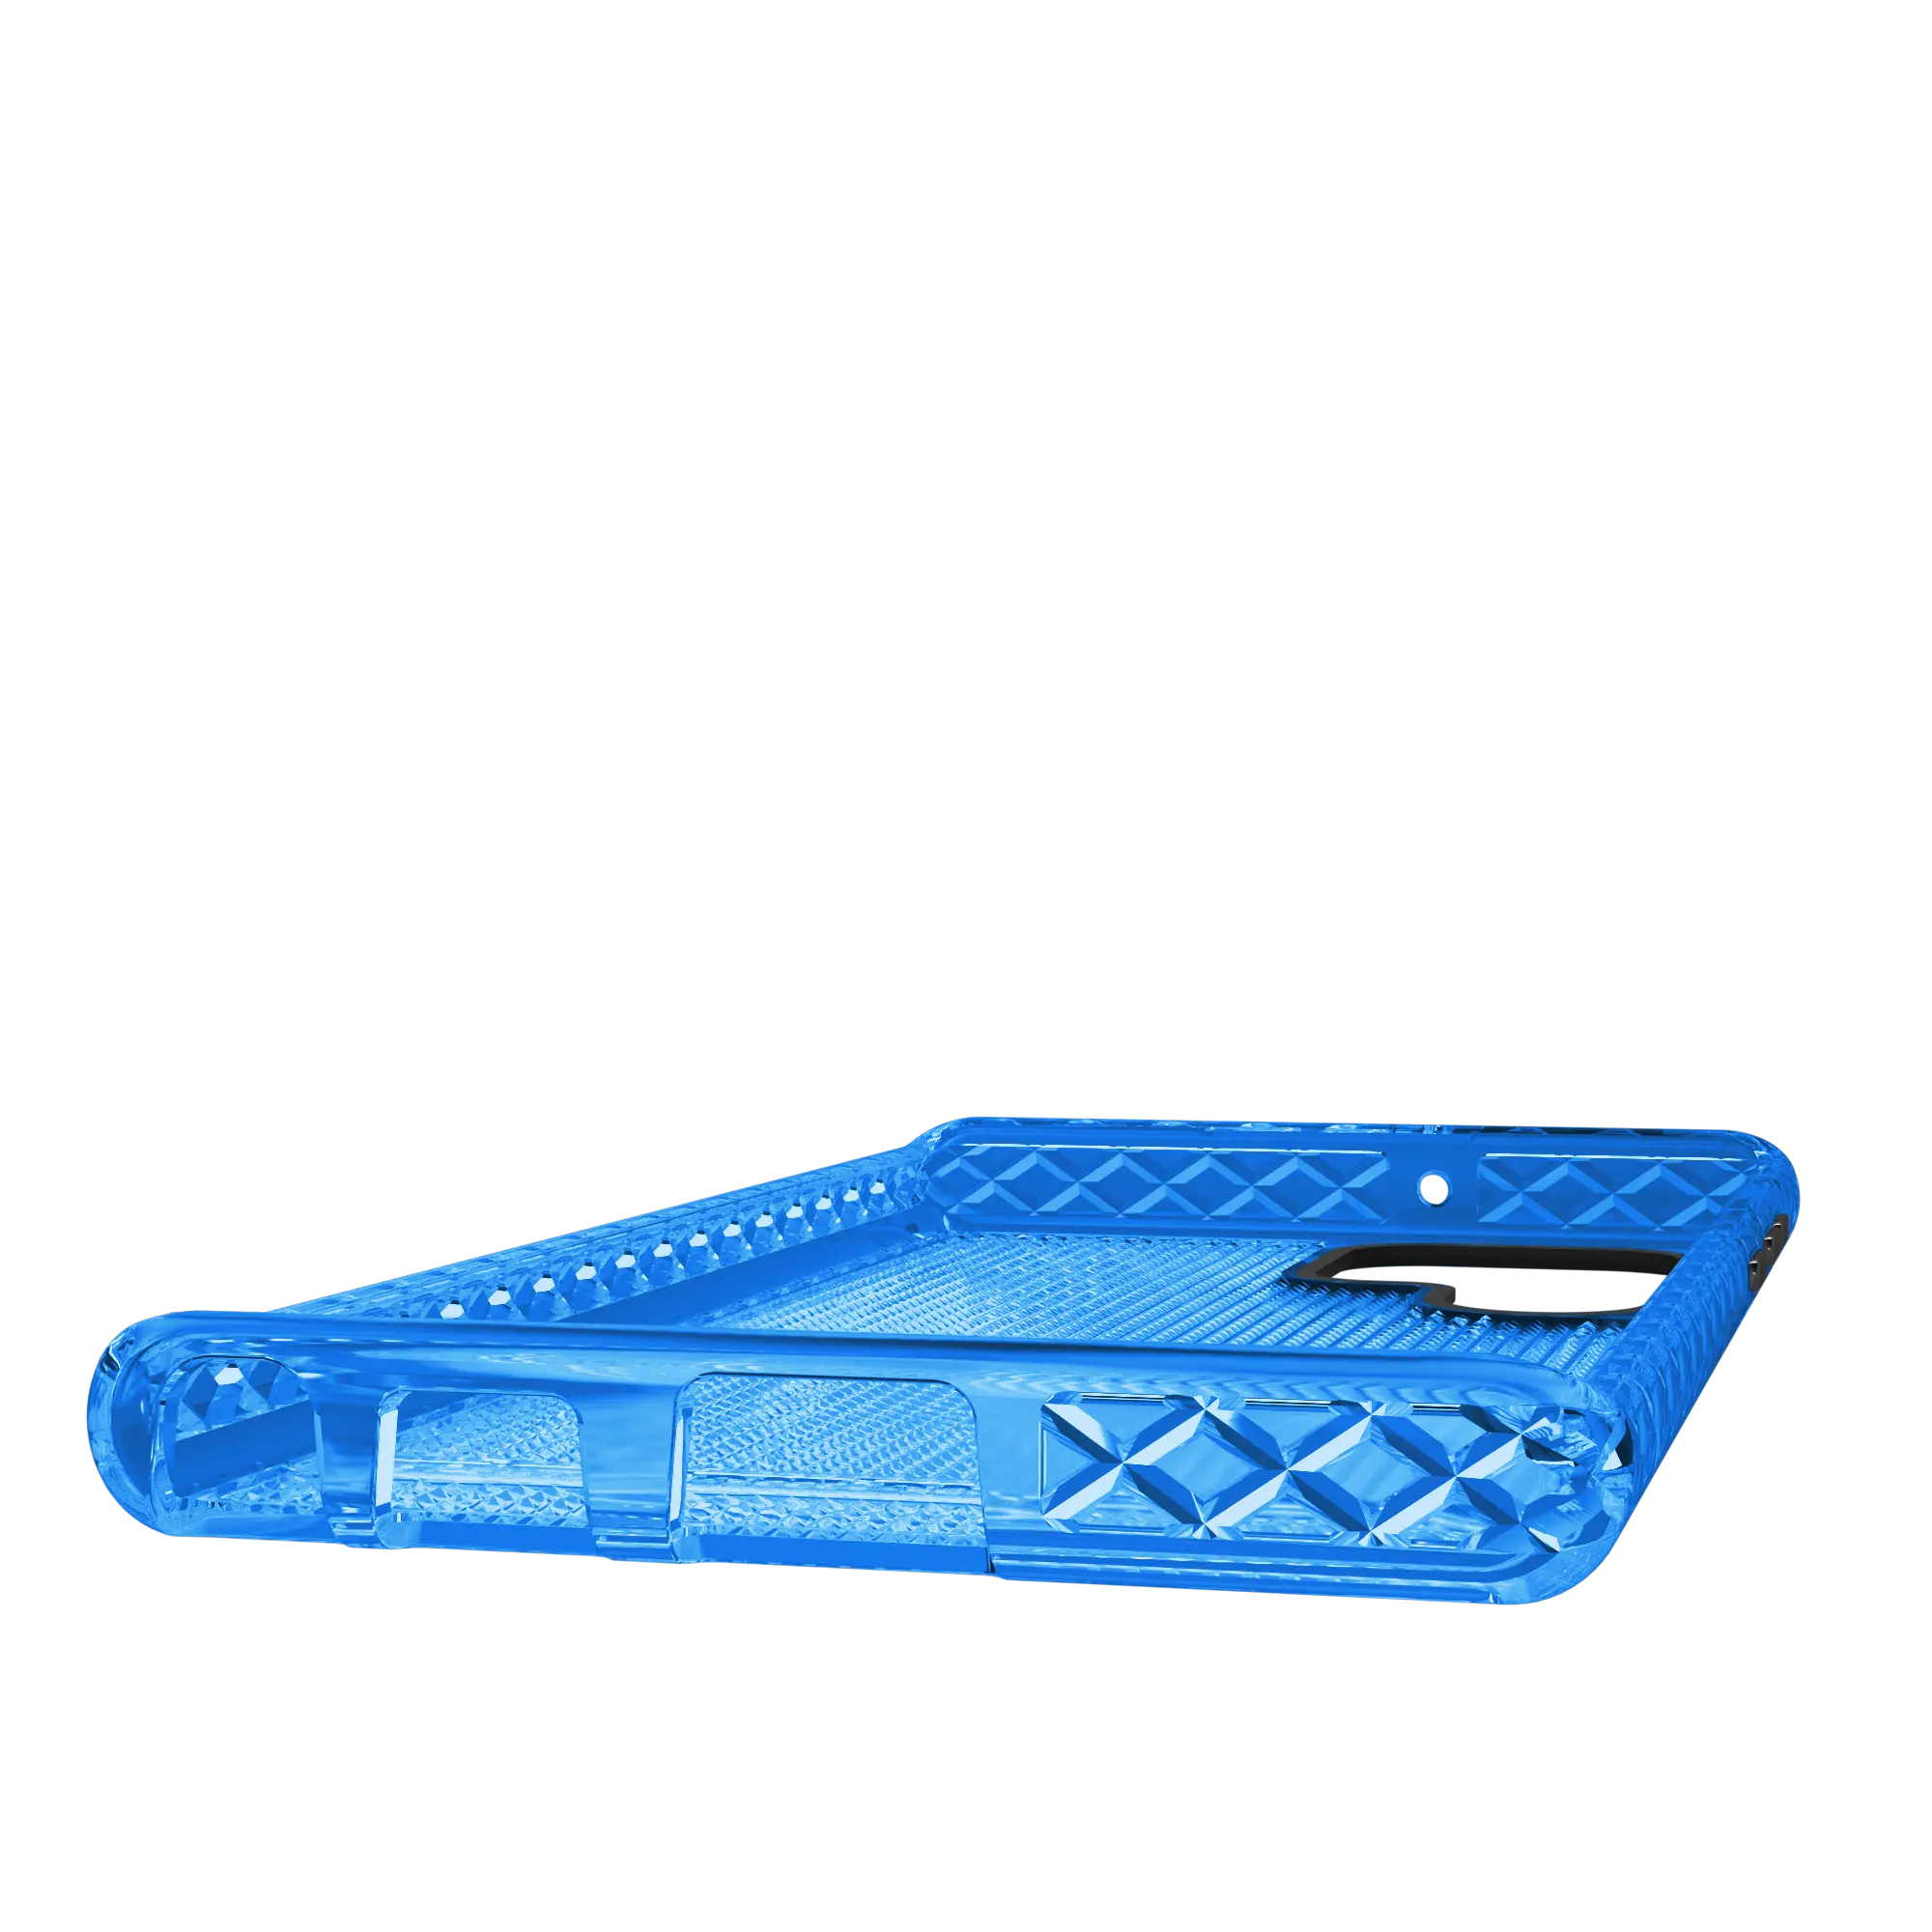 Altitude X Series for Samsung Galaxy S22 Ultra  - Blue - Case -  - cellhelmet